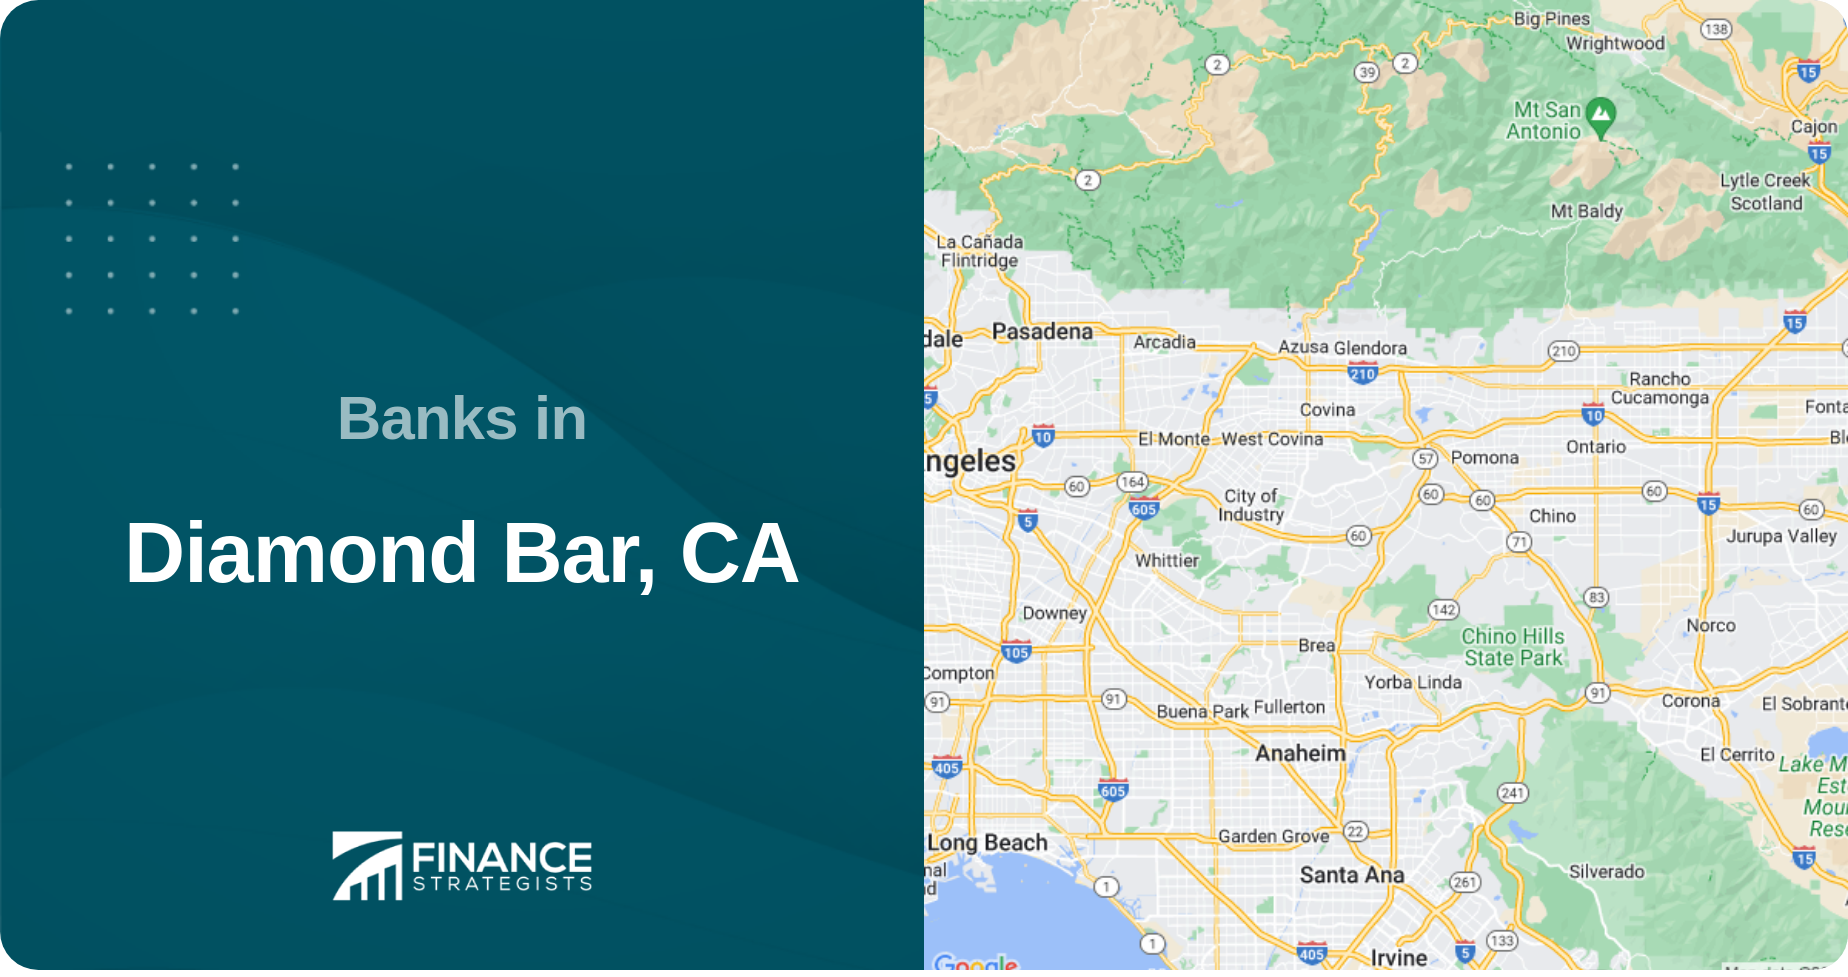 Banks in Diamond Bar, CA